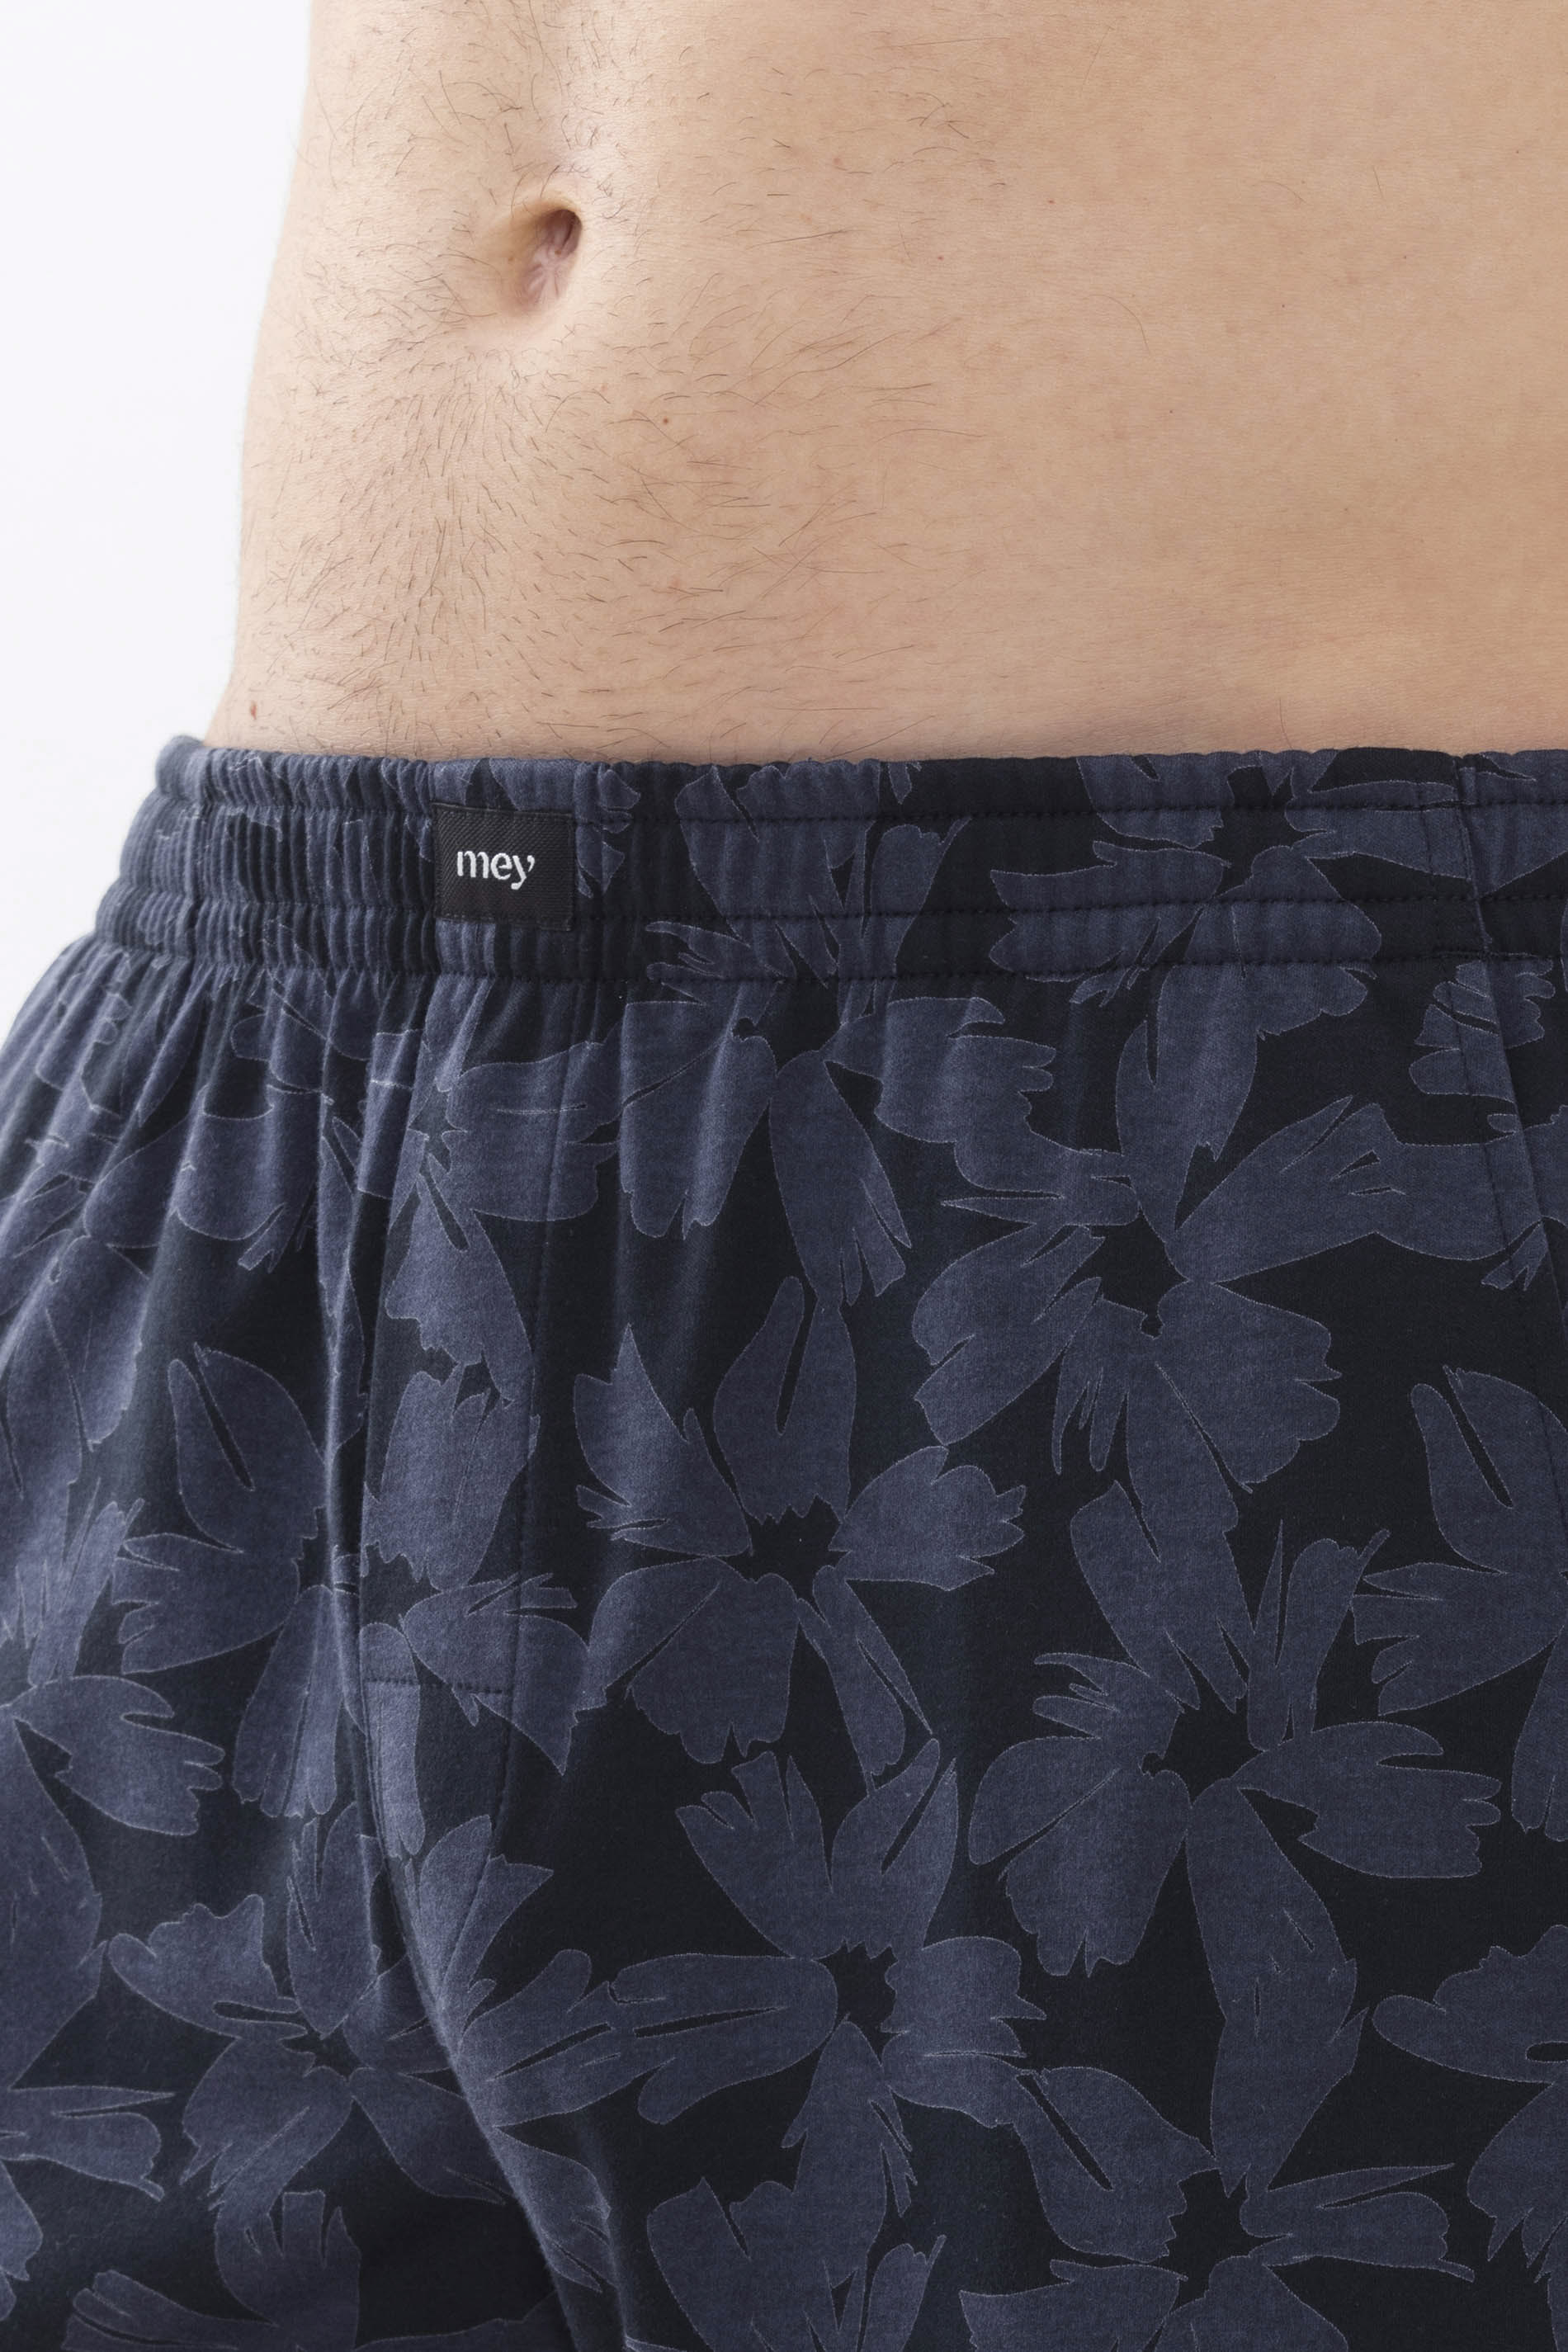 Short pyjama bottoms Indigo Serie Big Flowers Detail View 01 | mey®